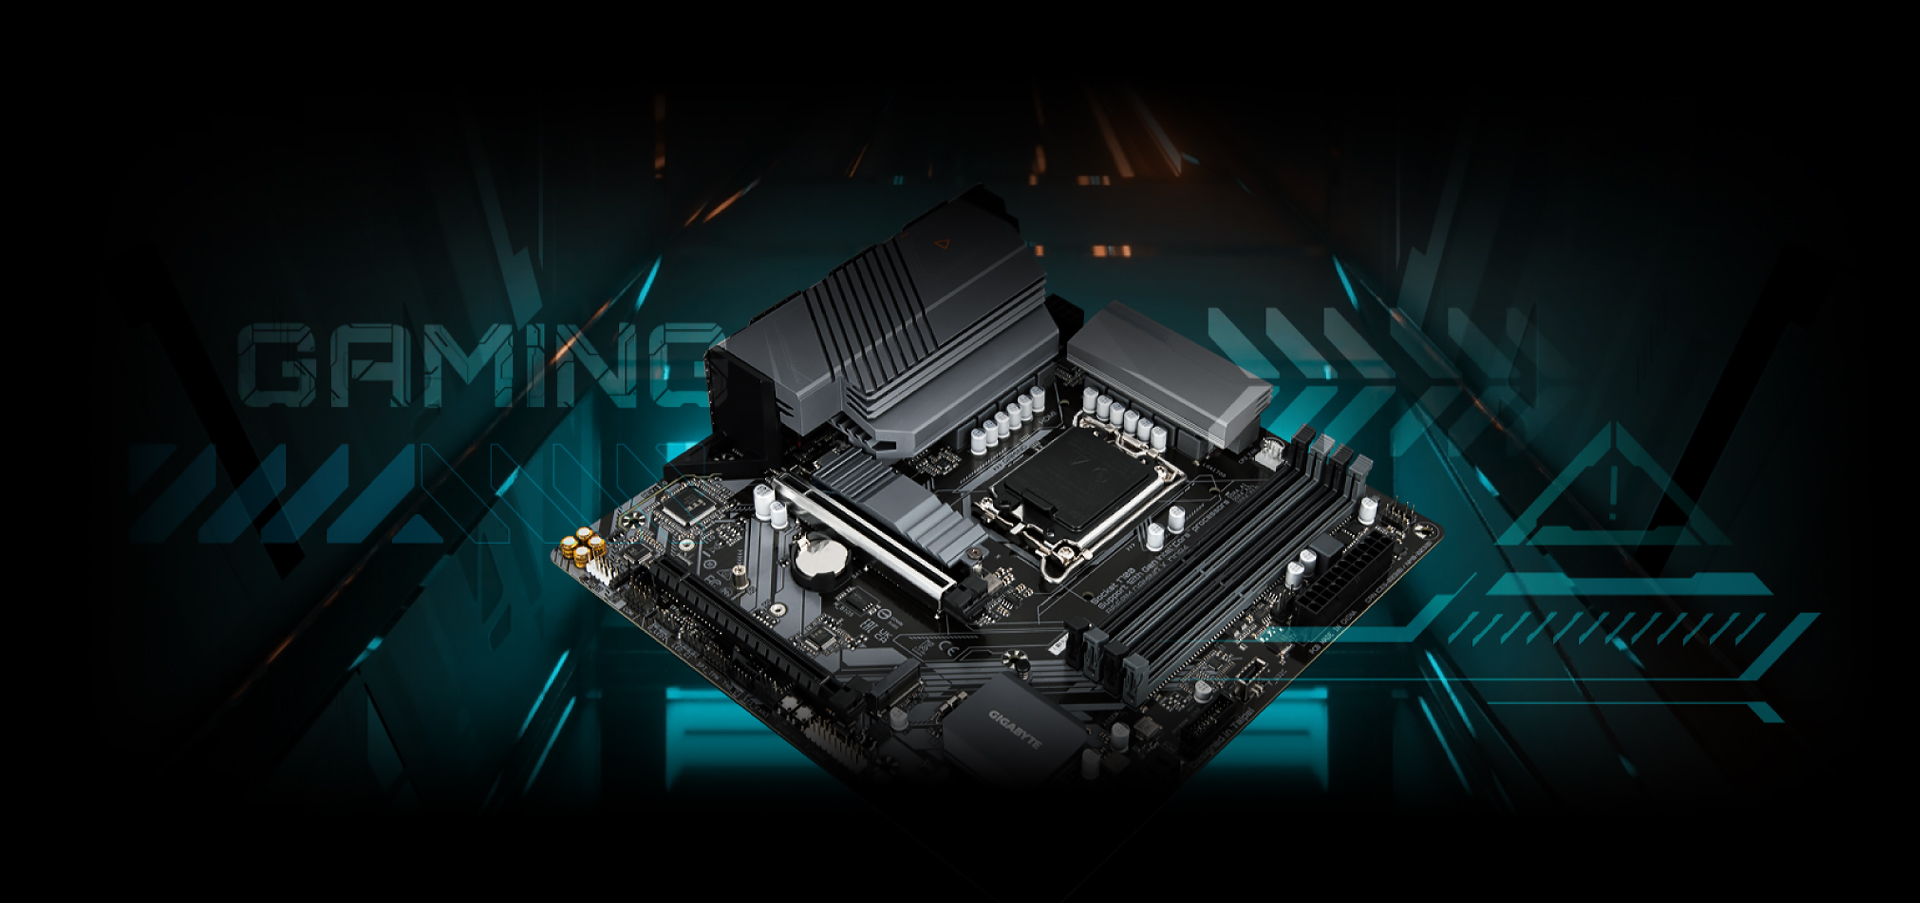 gigabyte ultra durable motherboard servers 5plus